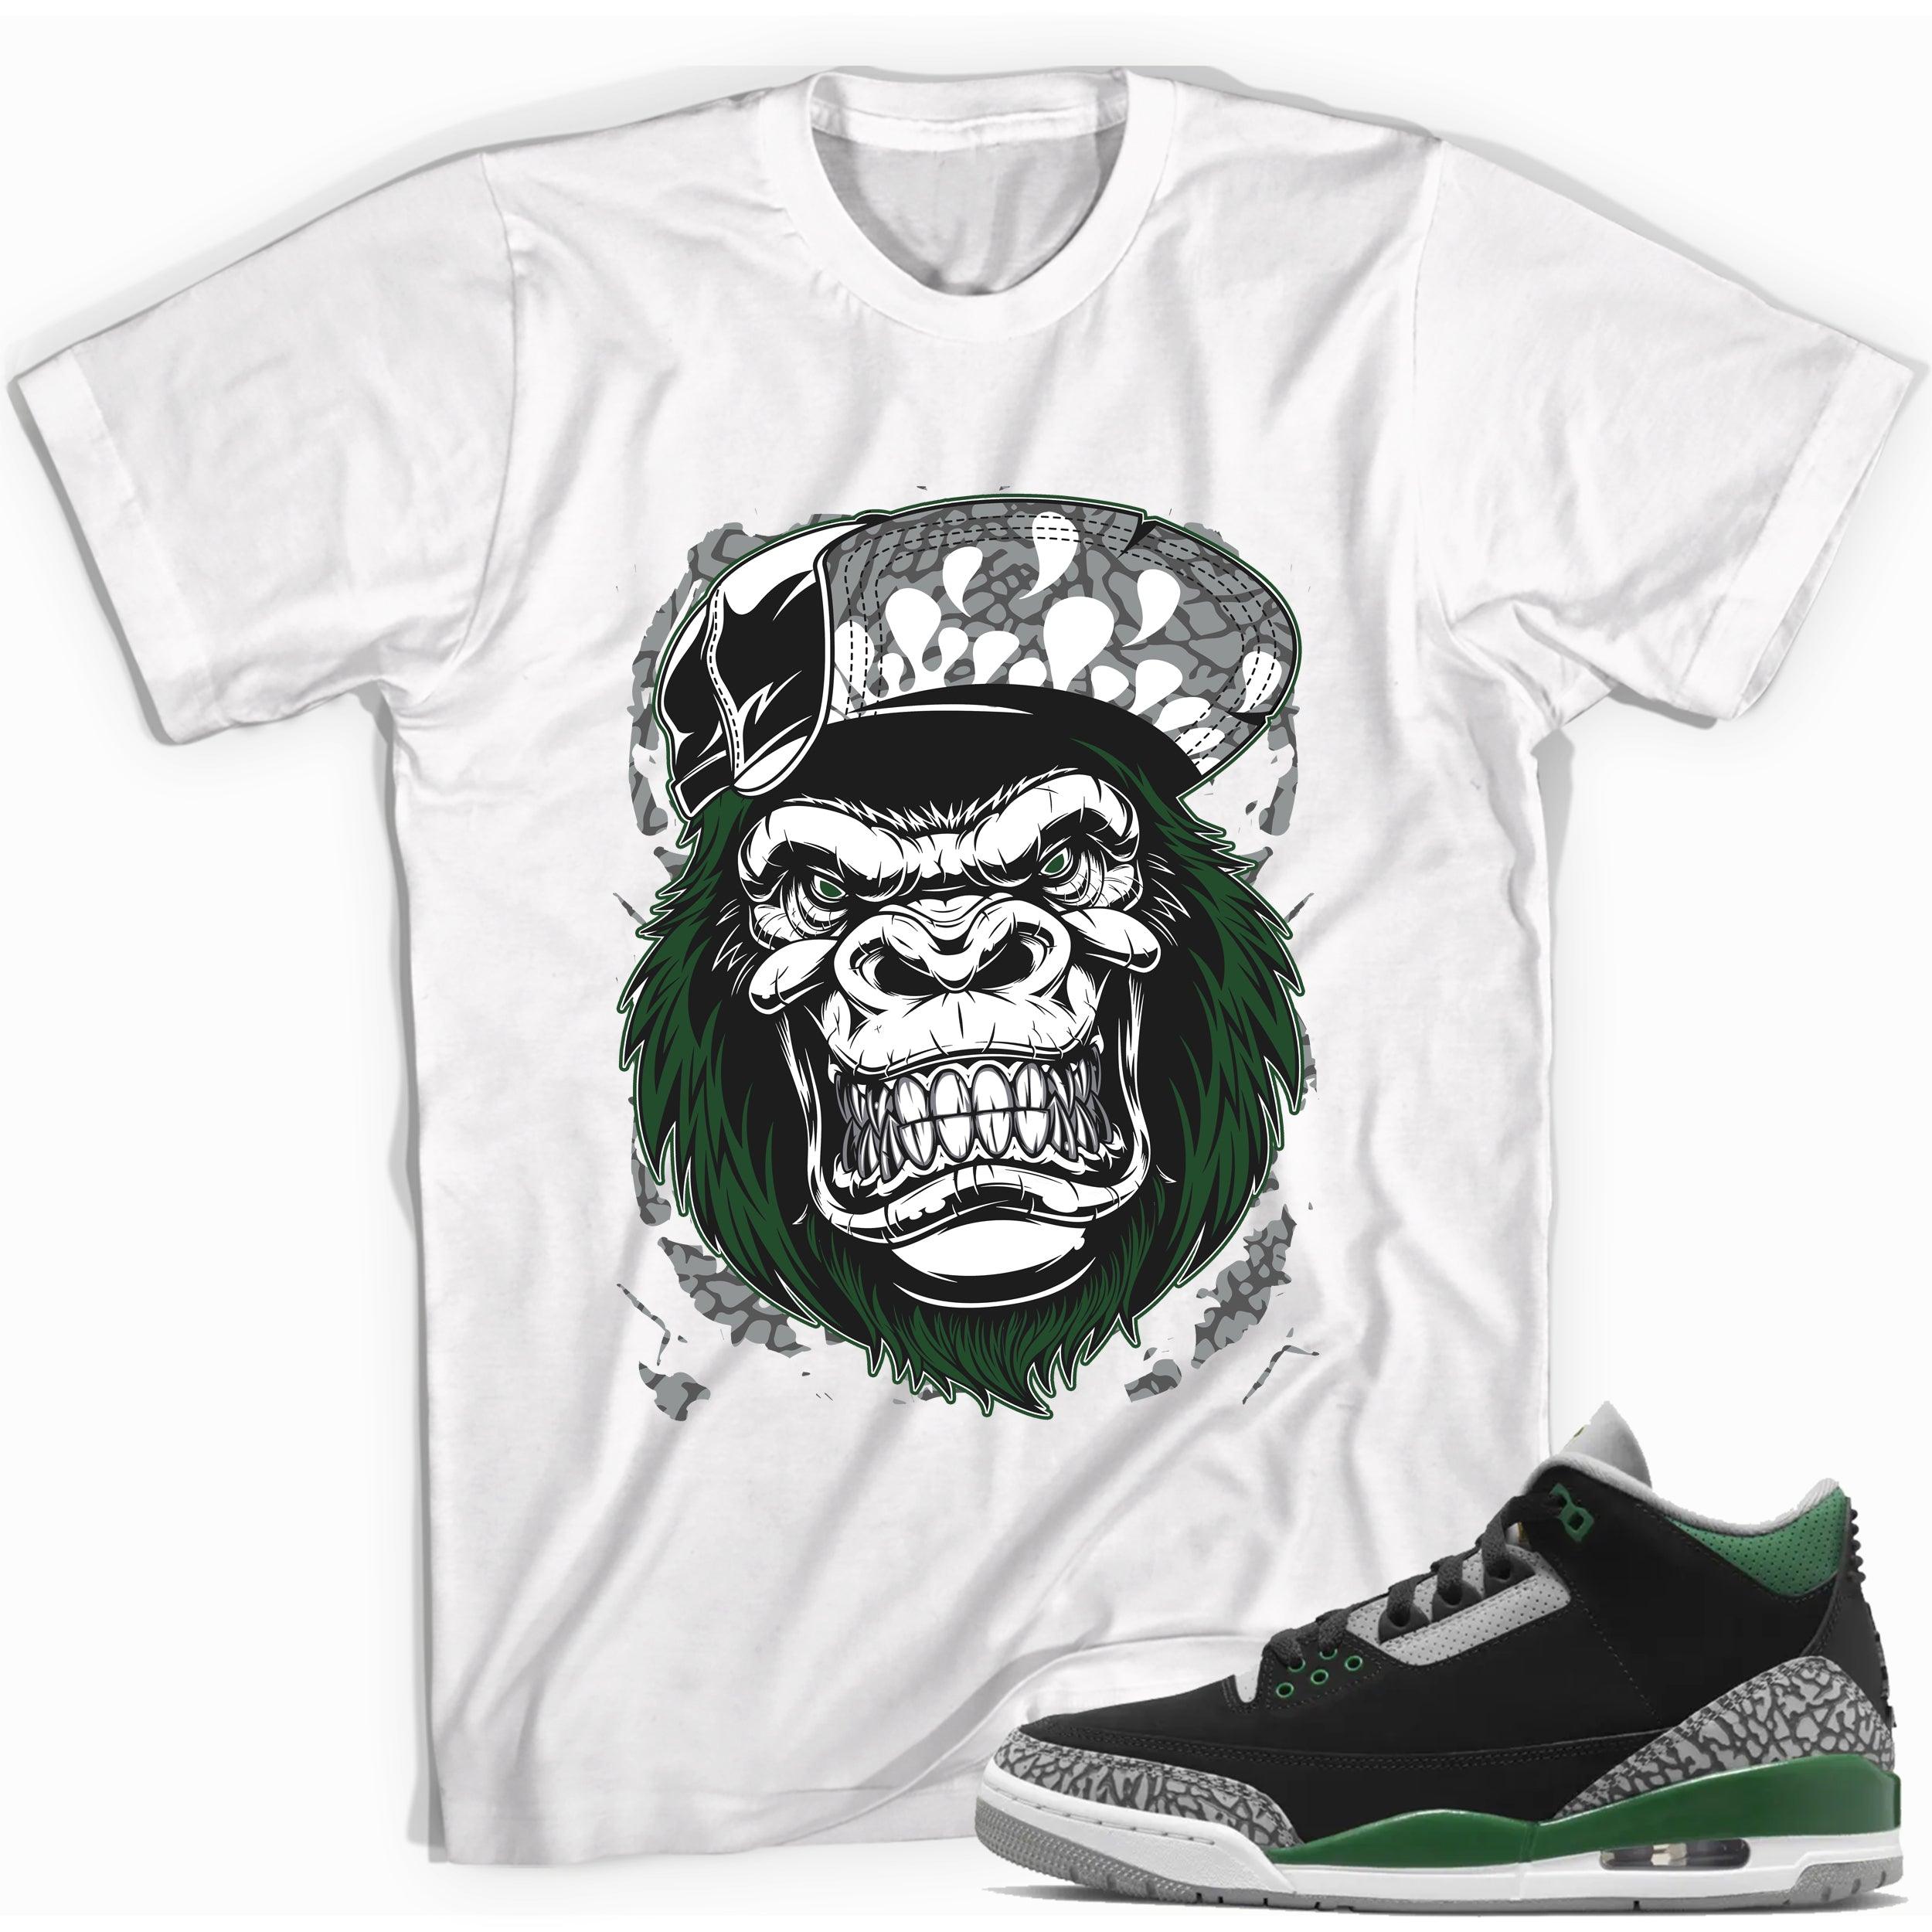 Gorilla Beast Shirt Jordan 3s Pine Green photo